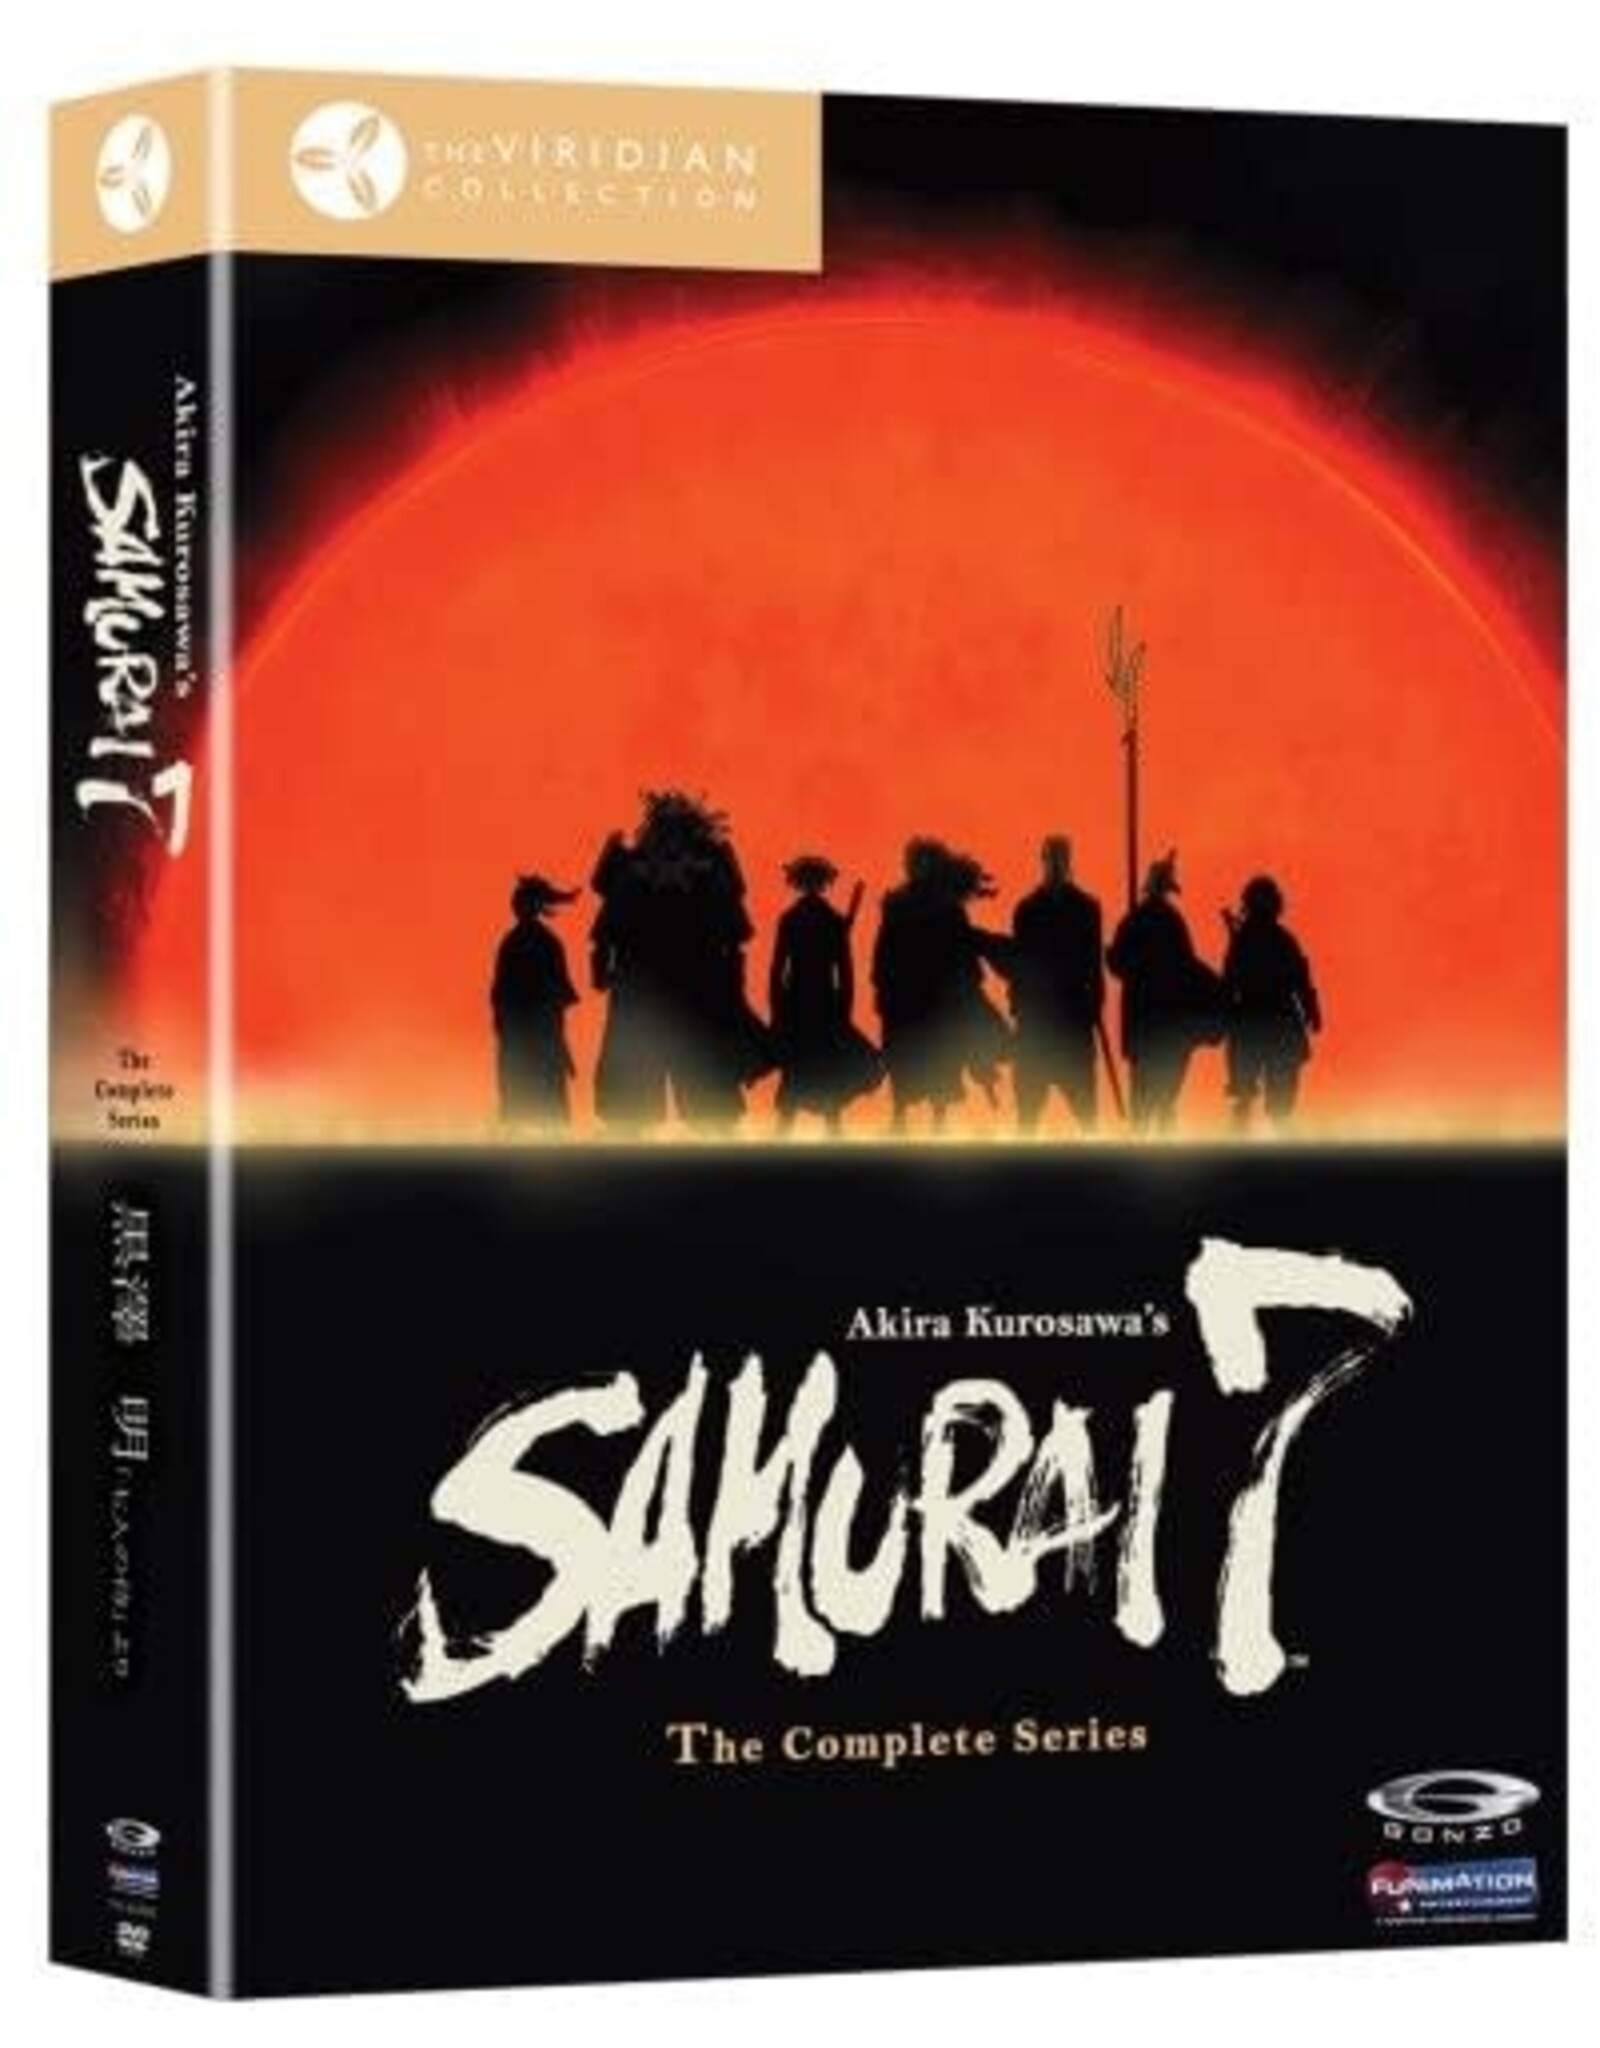 Anime & Animation Samurai 7 The Complete Series (Used)